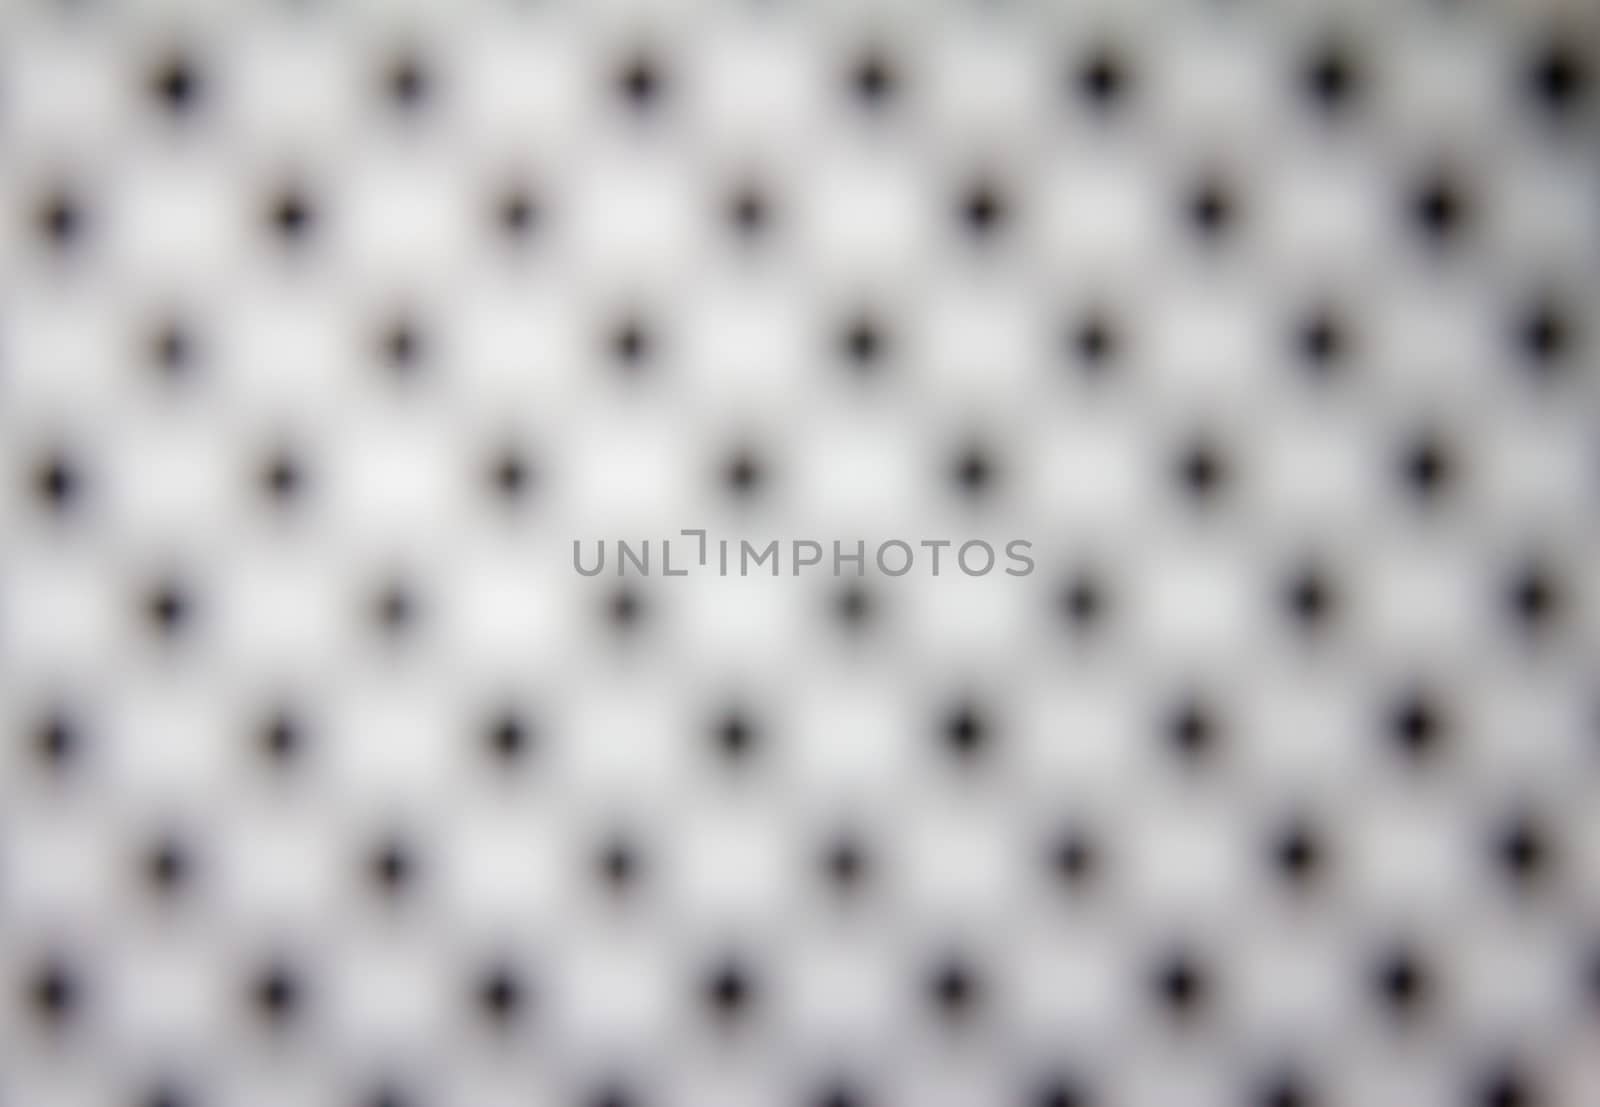 The Blur dot grid background by peerapixs